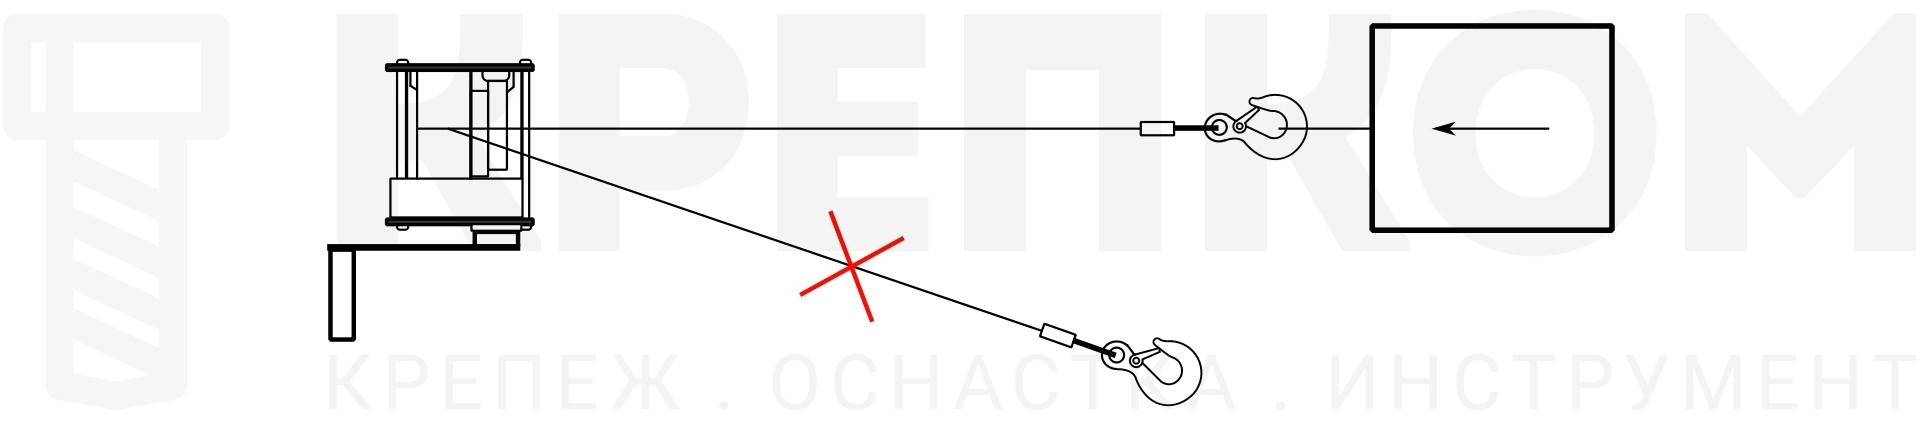 Положение лебедки при подтягивании (волочении) груза схема